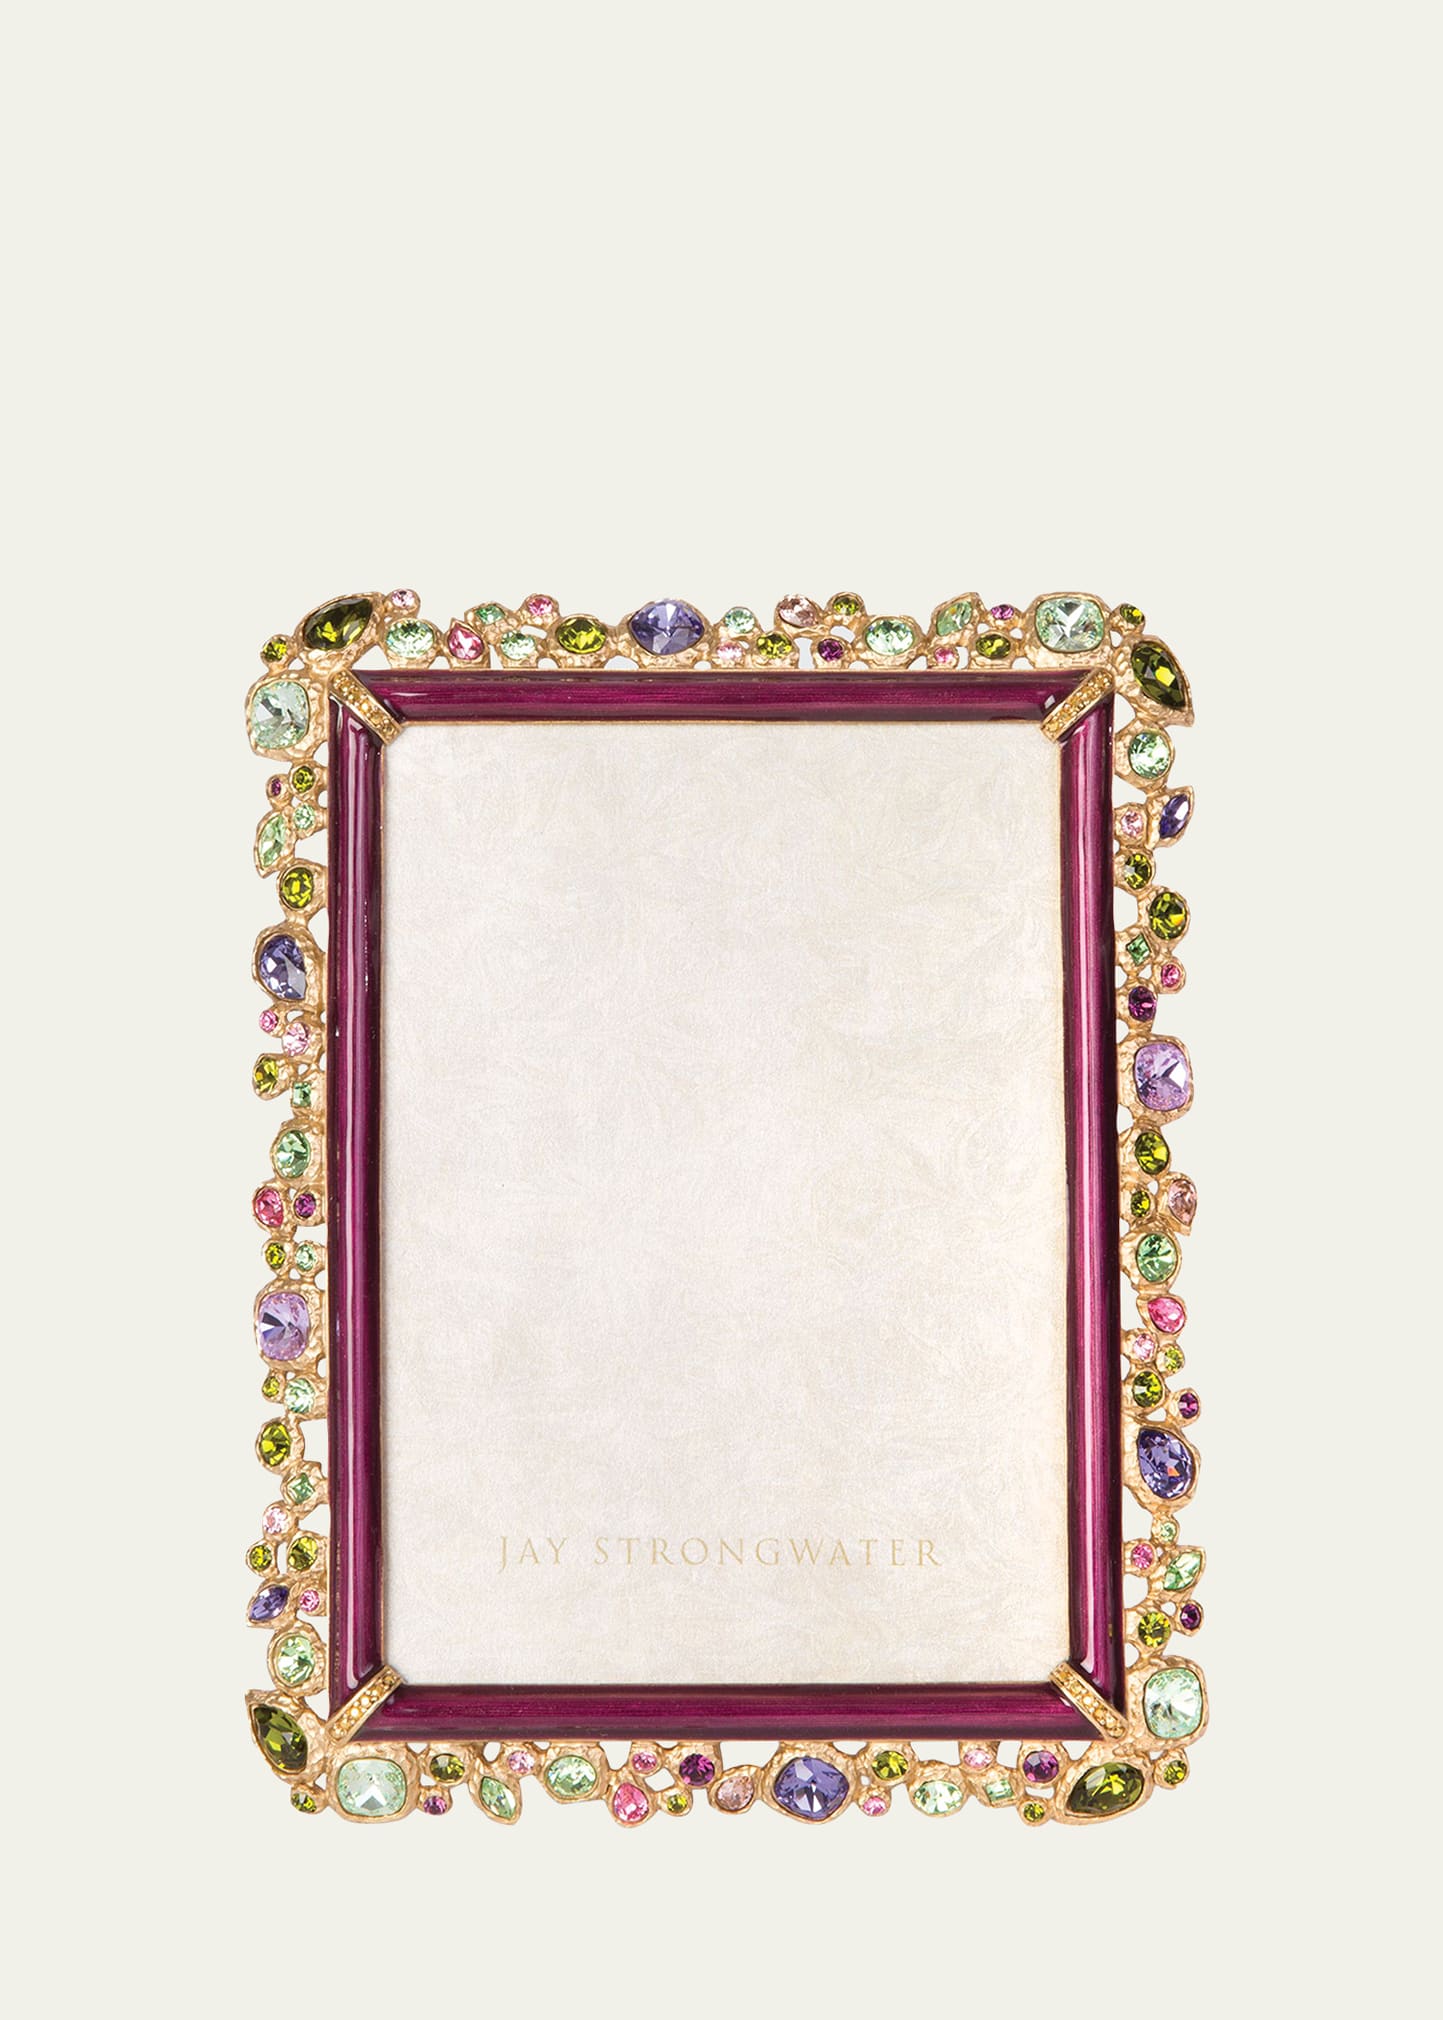 Leslie Bejeweled Picture Frame, 5" x 7"